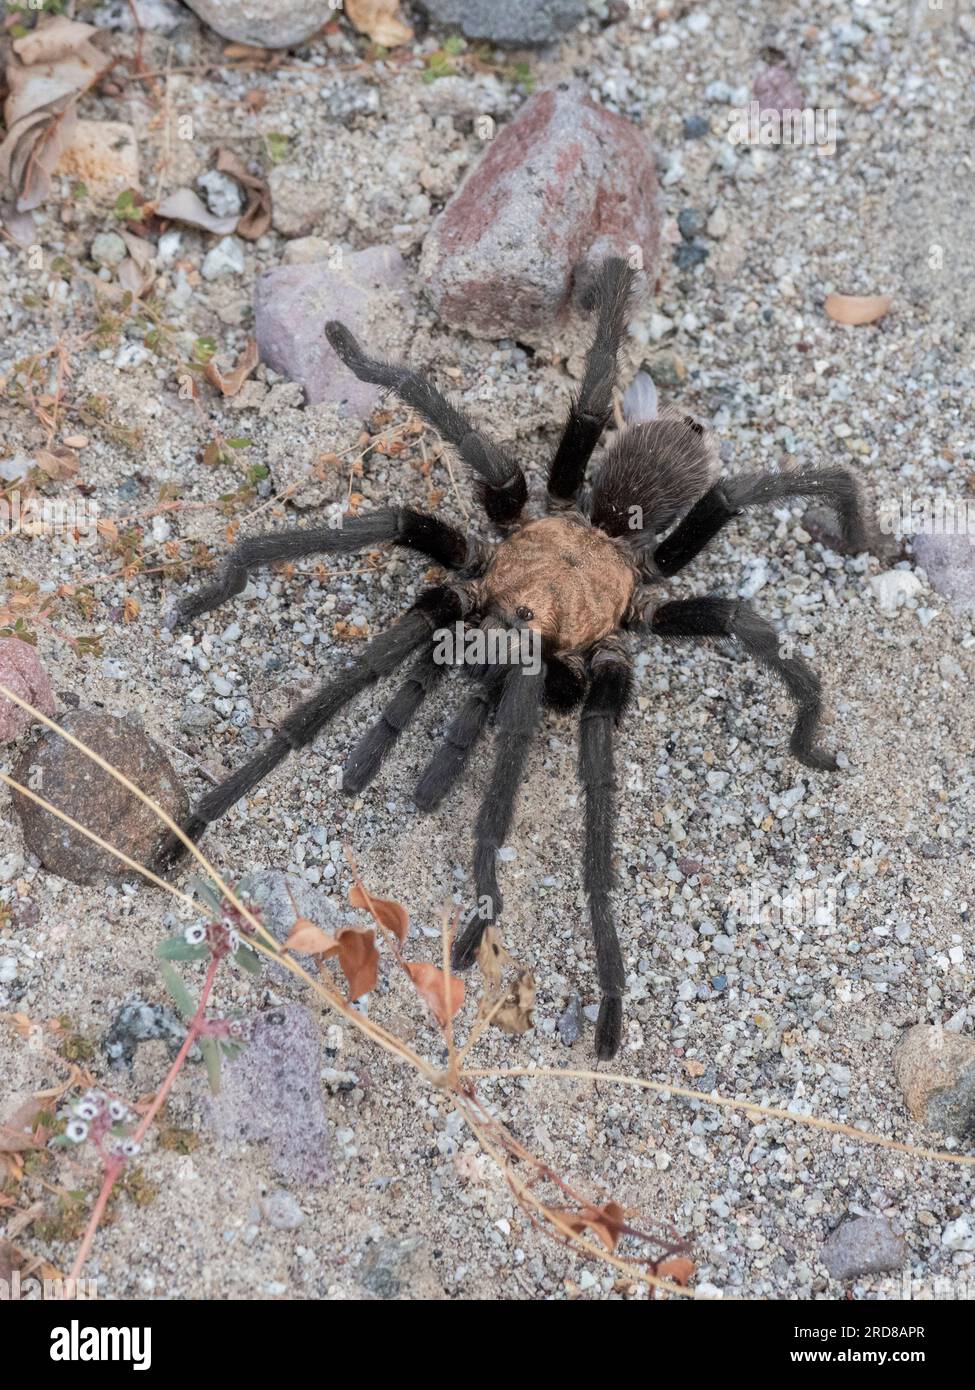 Adult tarantula (Aphonopelma spp.), found near San Jose del Cabo, Baja California Sur, Mexico, North America Stock Photo